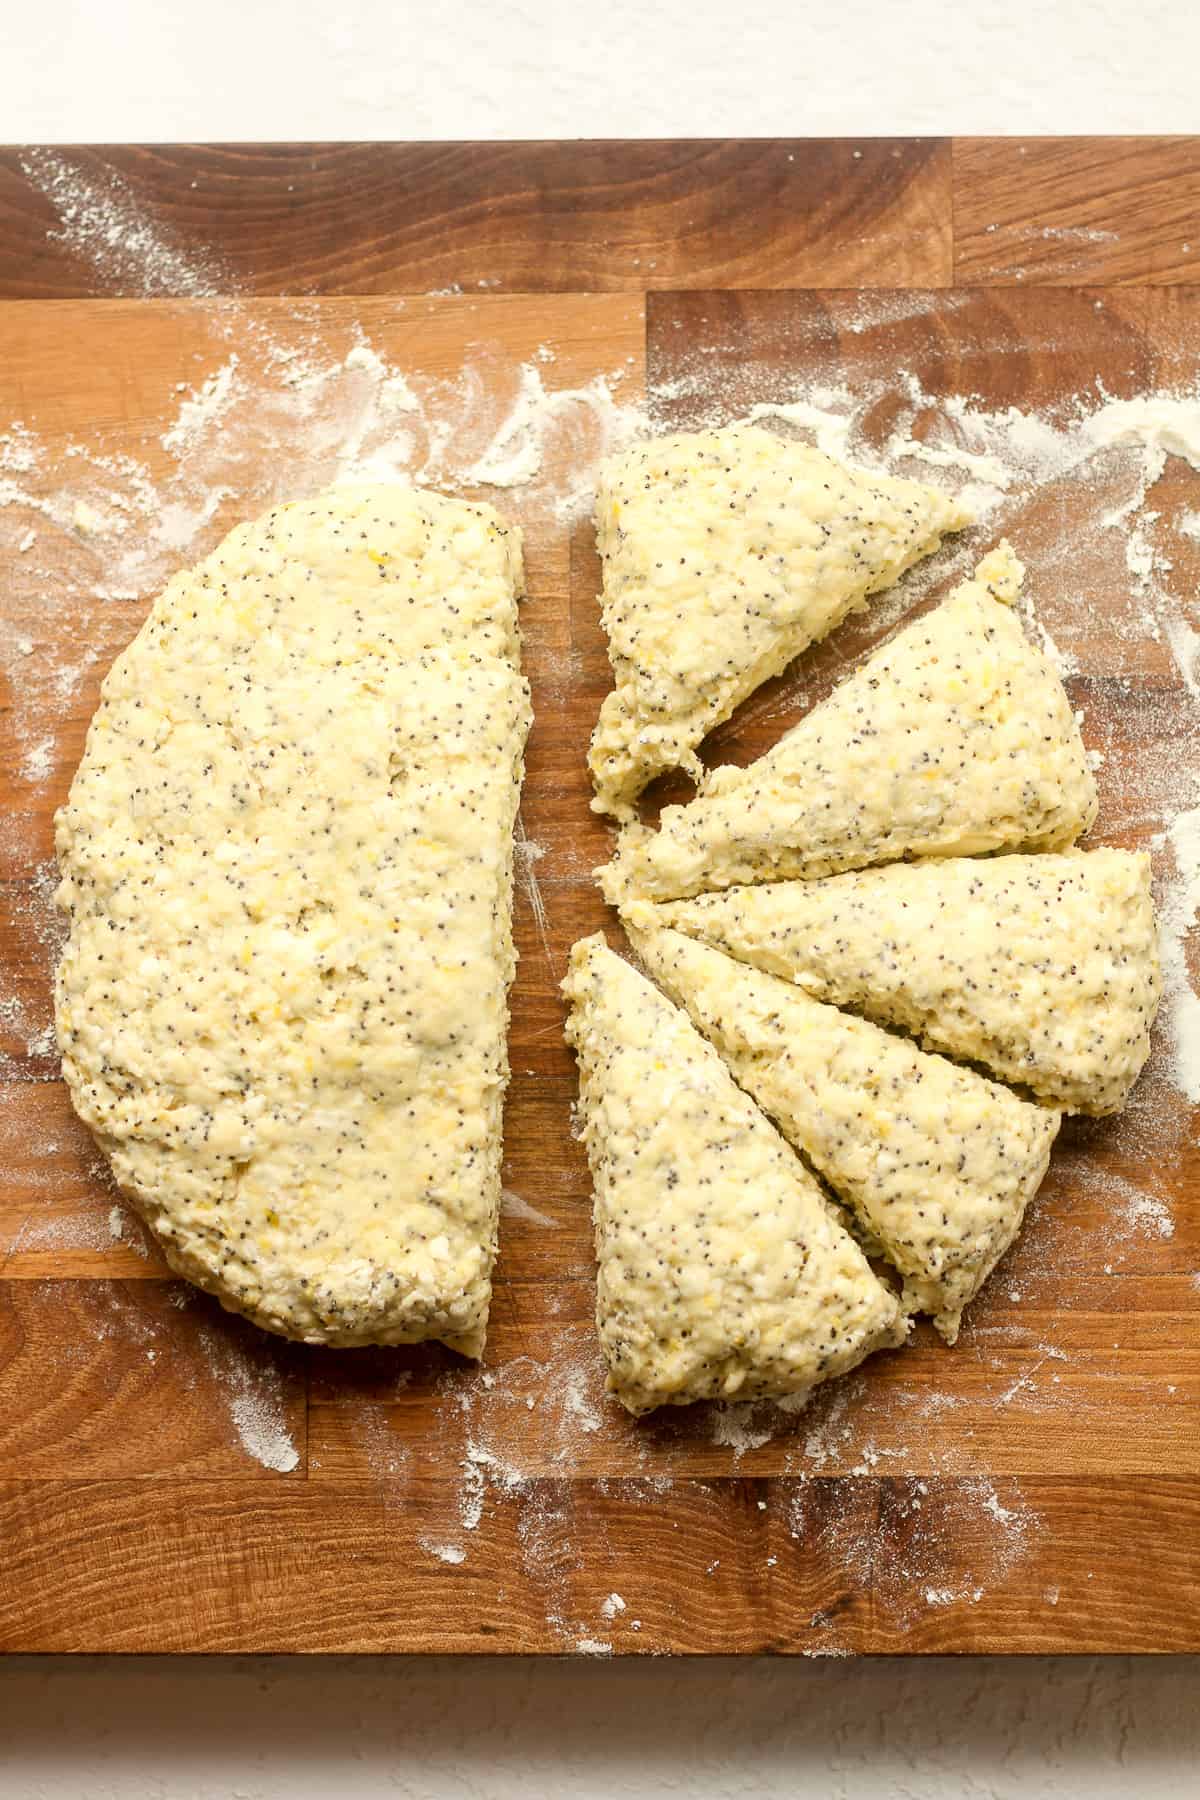 A board of the sliced lemon poppyseed scone dough.